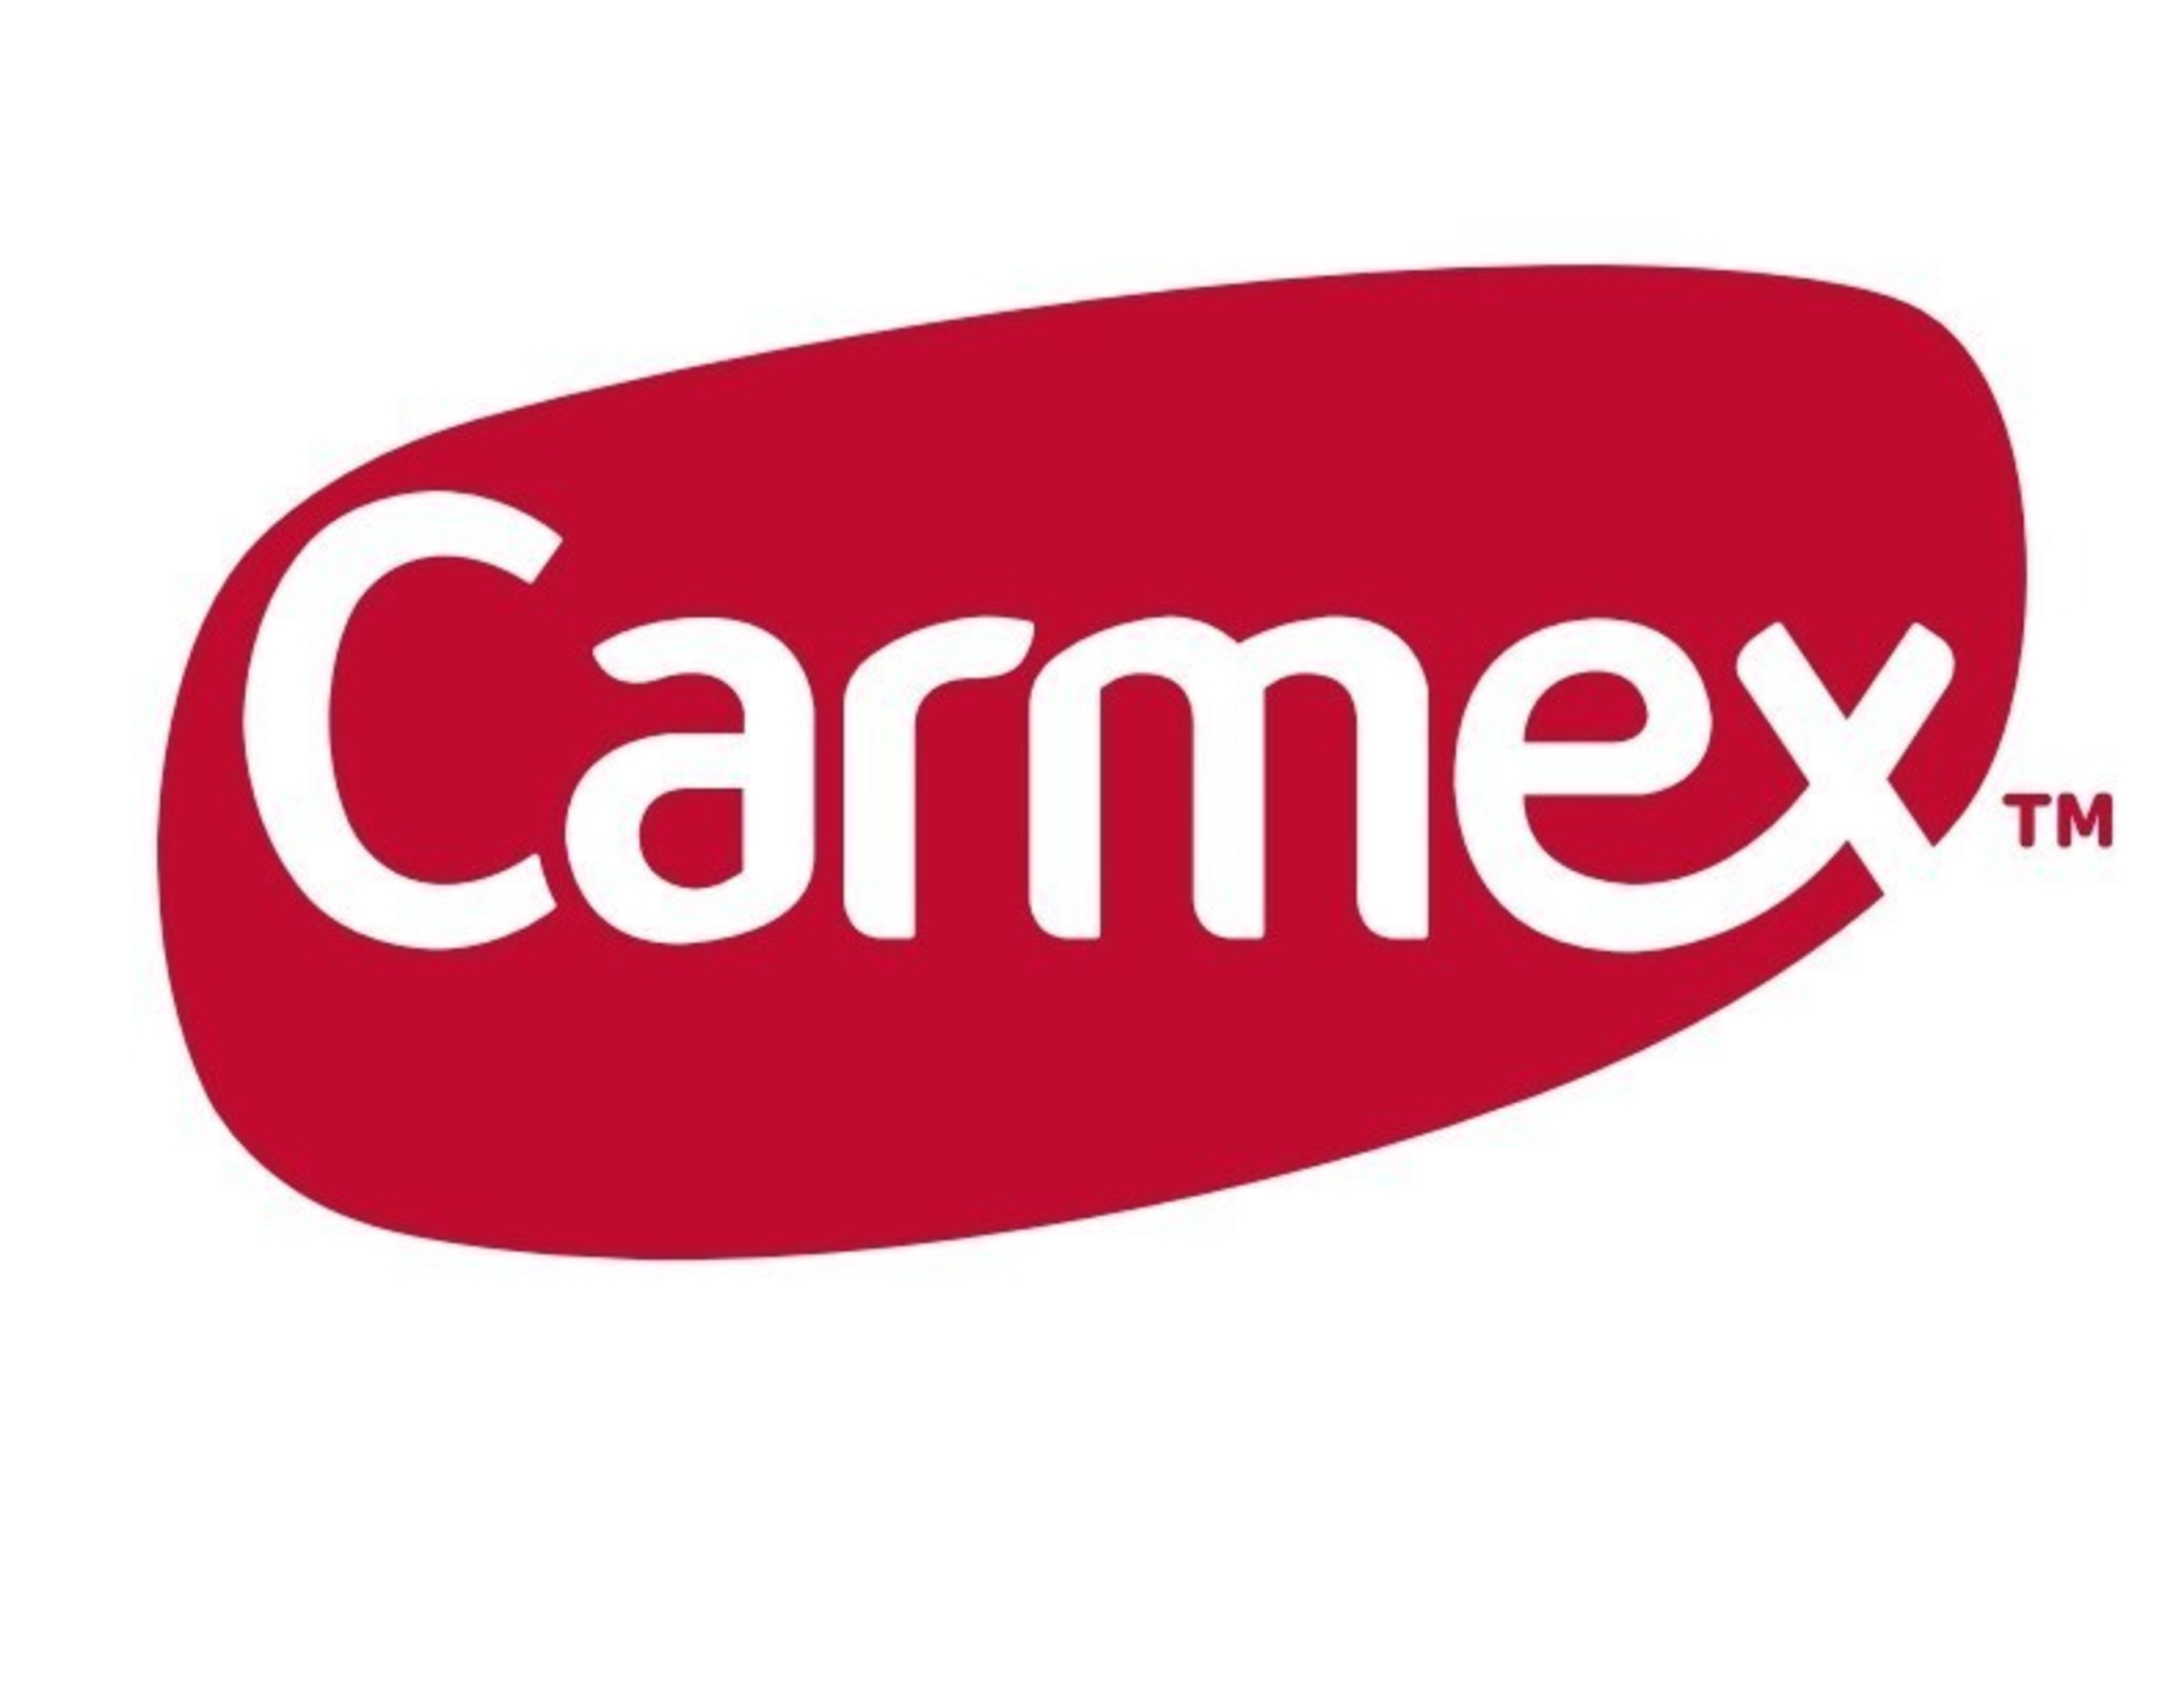 Carmex Logo